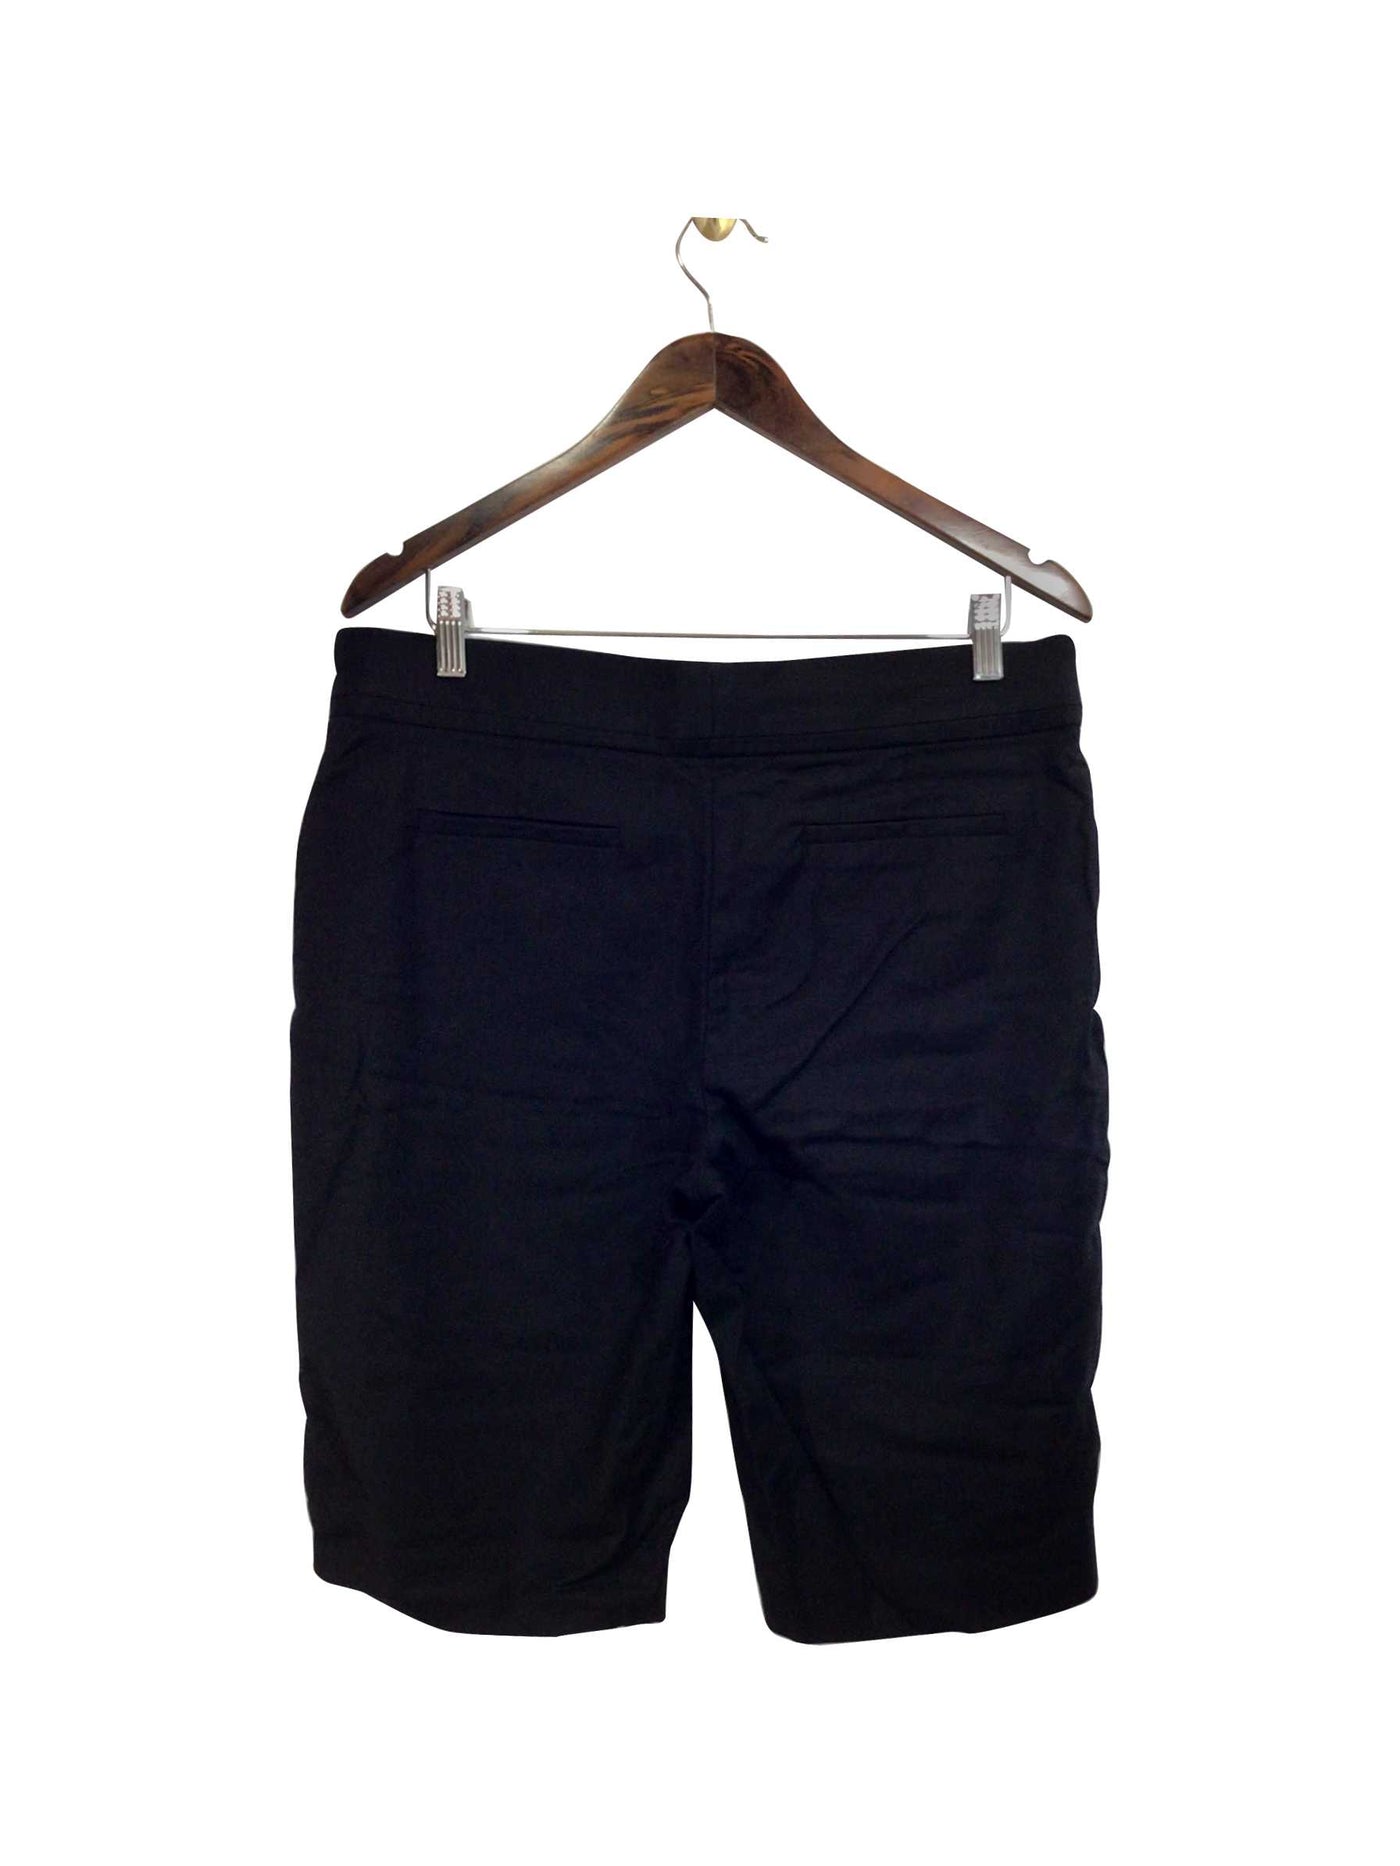 PETER NYGARD Regular fit Pant Shorts in Black  -  12  19.59 Koop